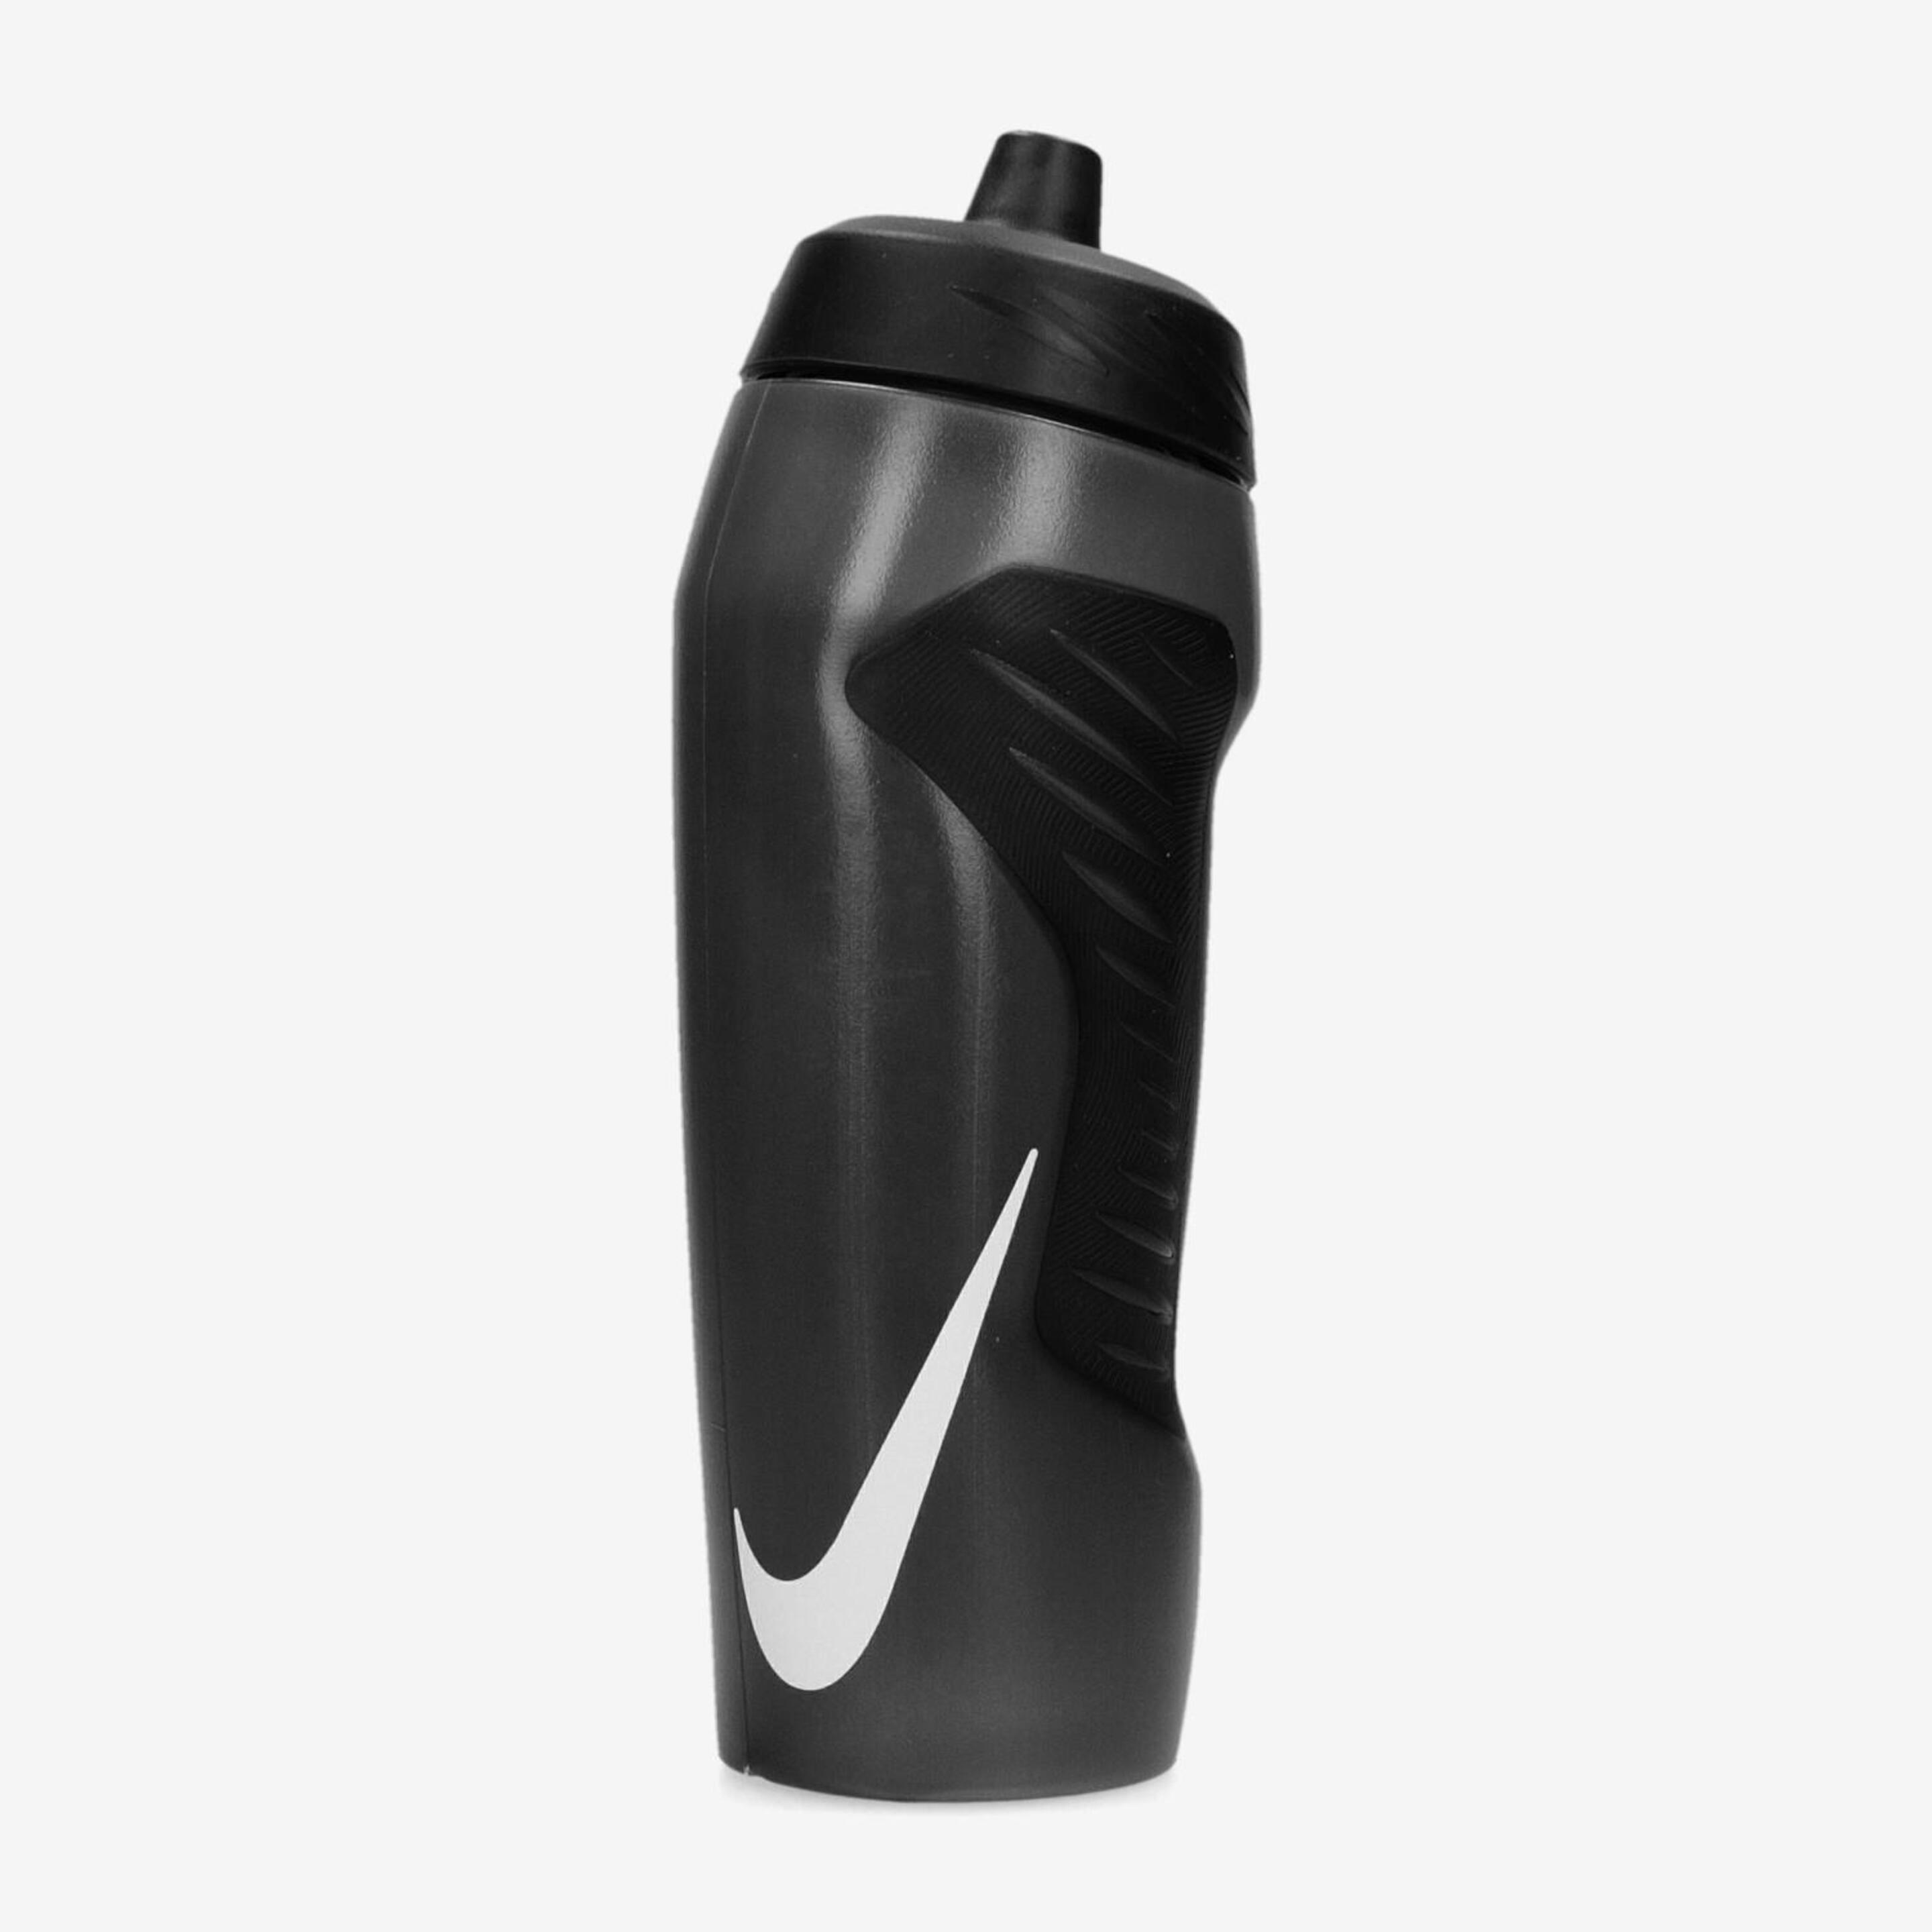 Nike Hyperfuel 710ml